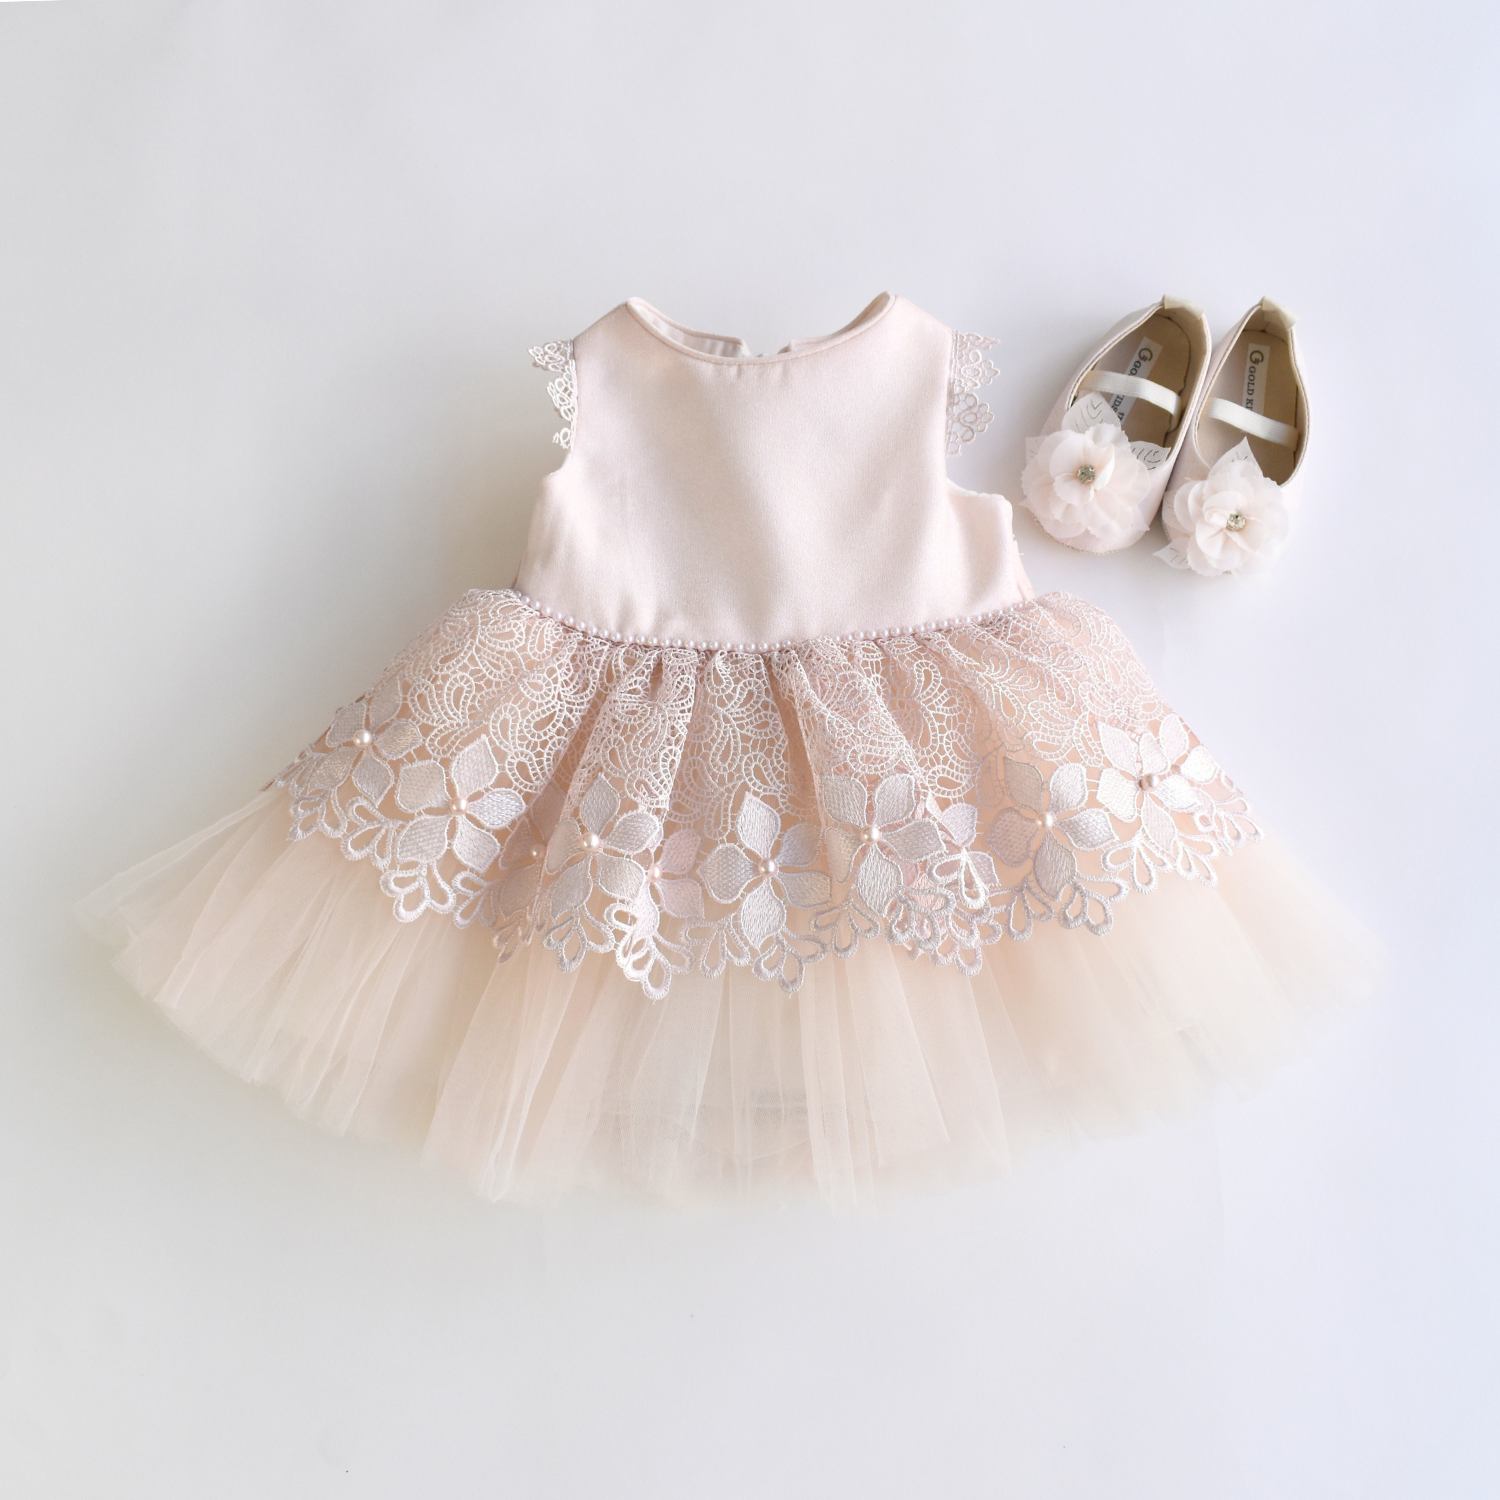 Baby Monica's Lace Dress